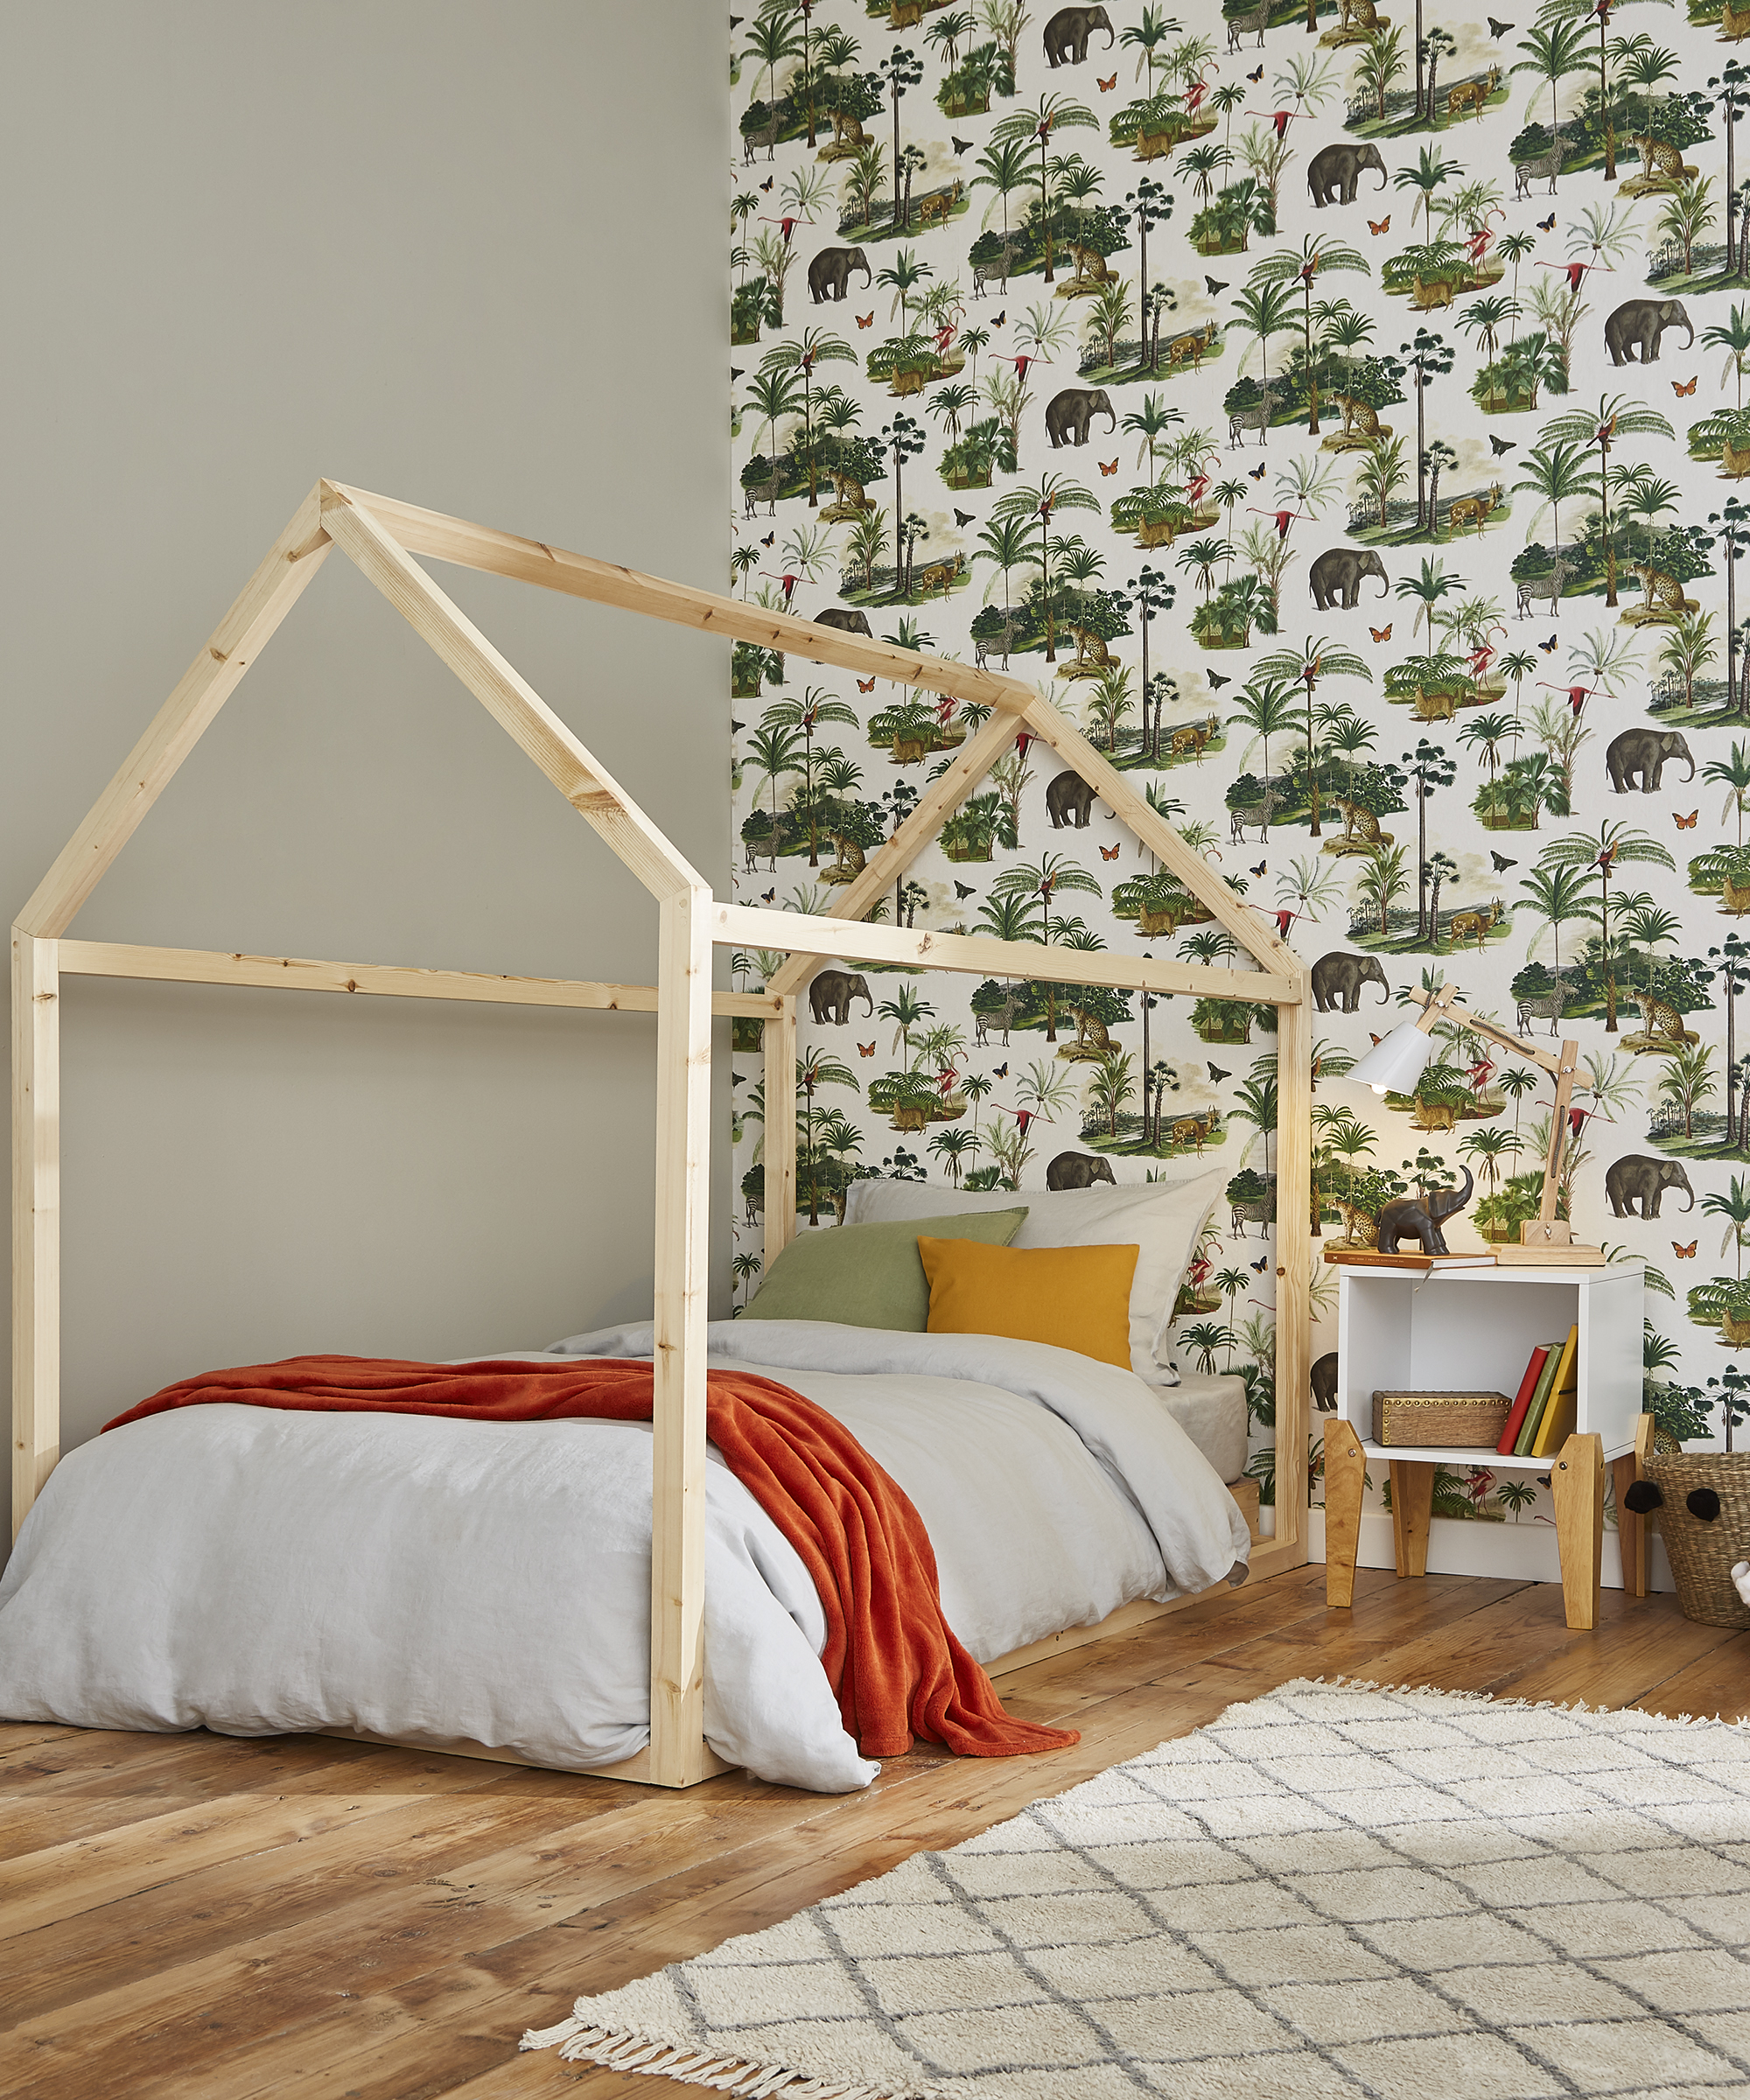 Safari printed wallpaper decor in boys bedroom by Graham and Brown